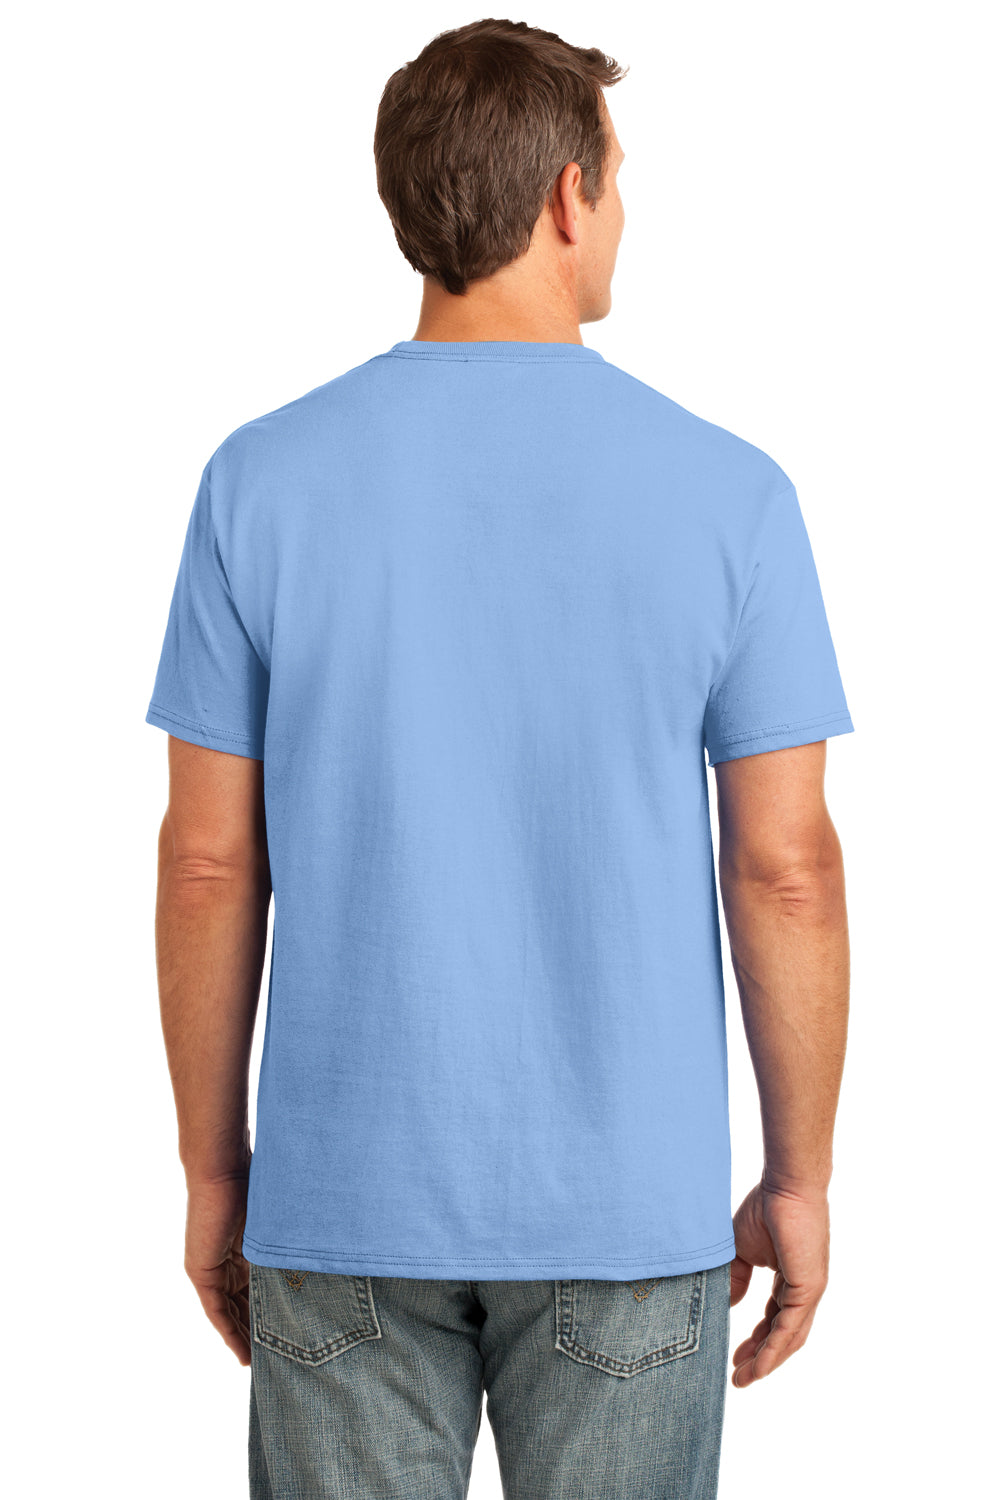 Port & Company PC54P Mens Core Short Sleeve Crewneck T-Shirt w/ Pocket Light Blue Back